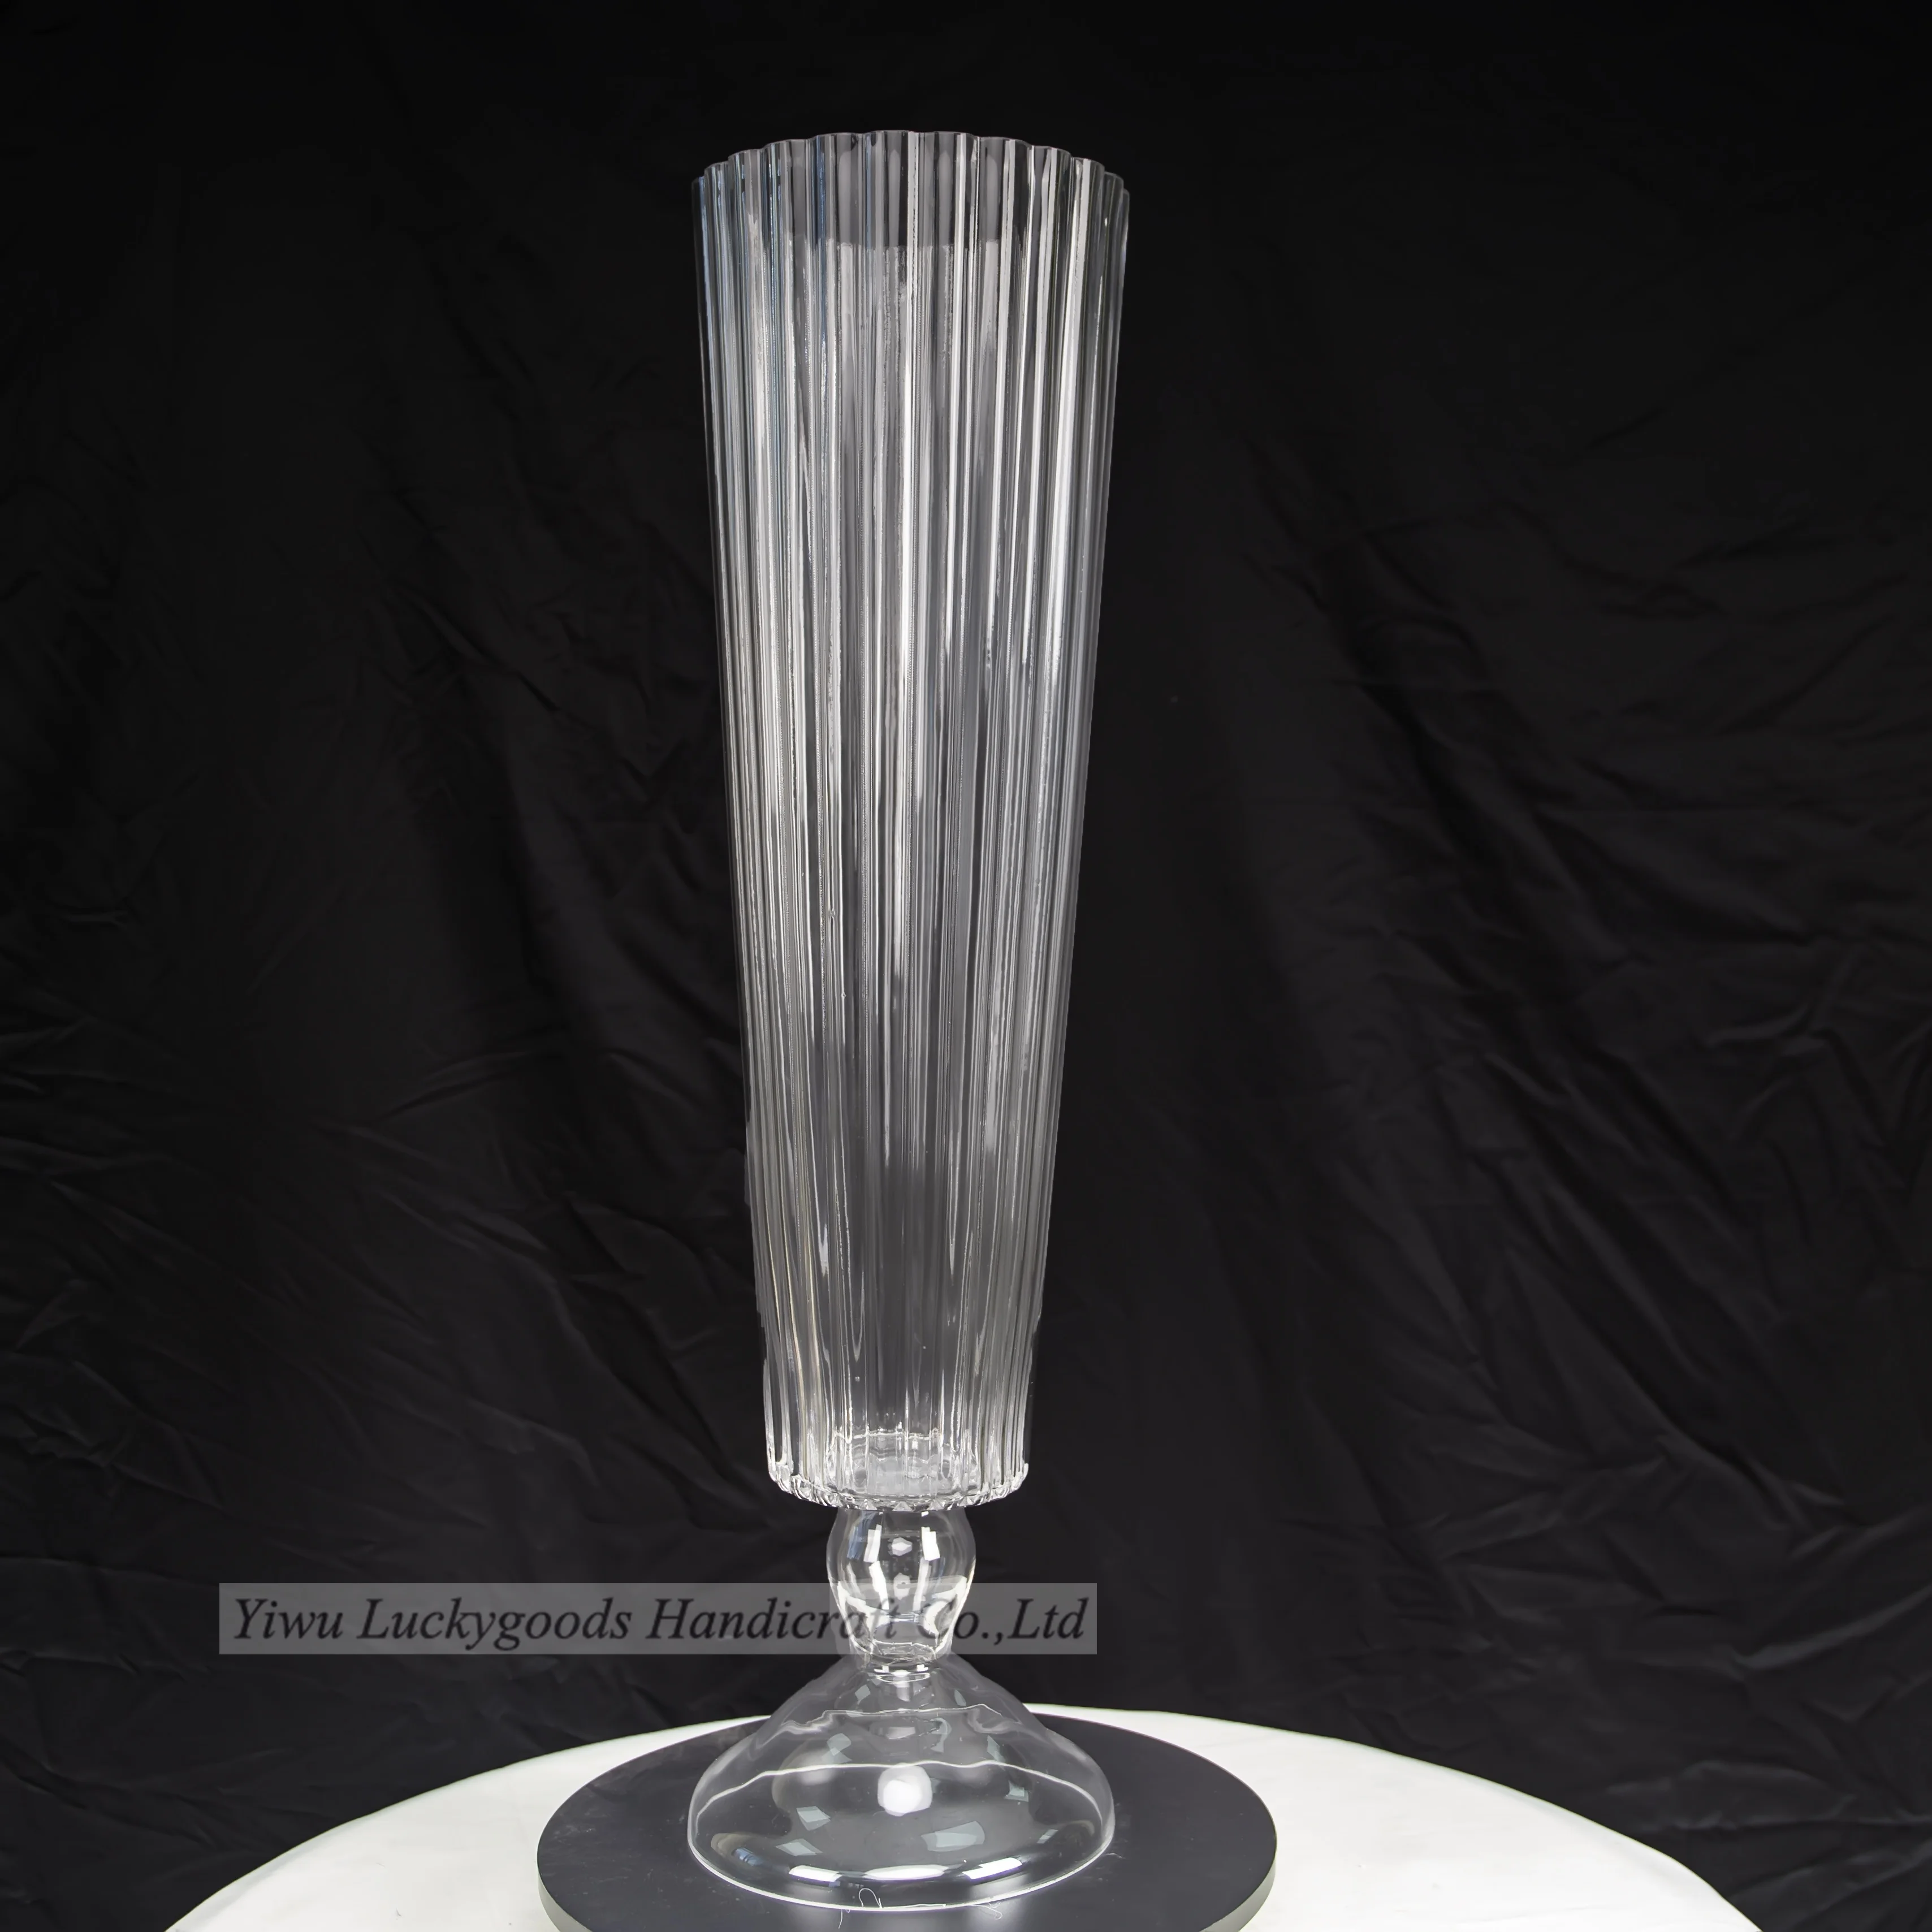 Fashionable Wedding Centerpiece Vases Tall Glass Vase Buy Wedding Centerpiece Vasestall Glass